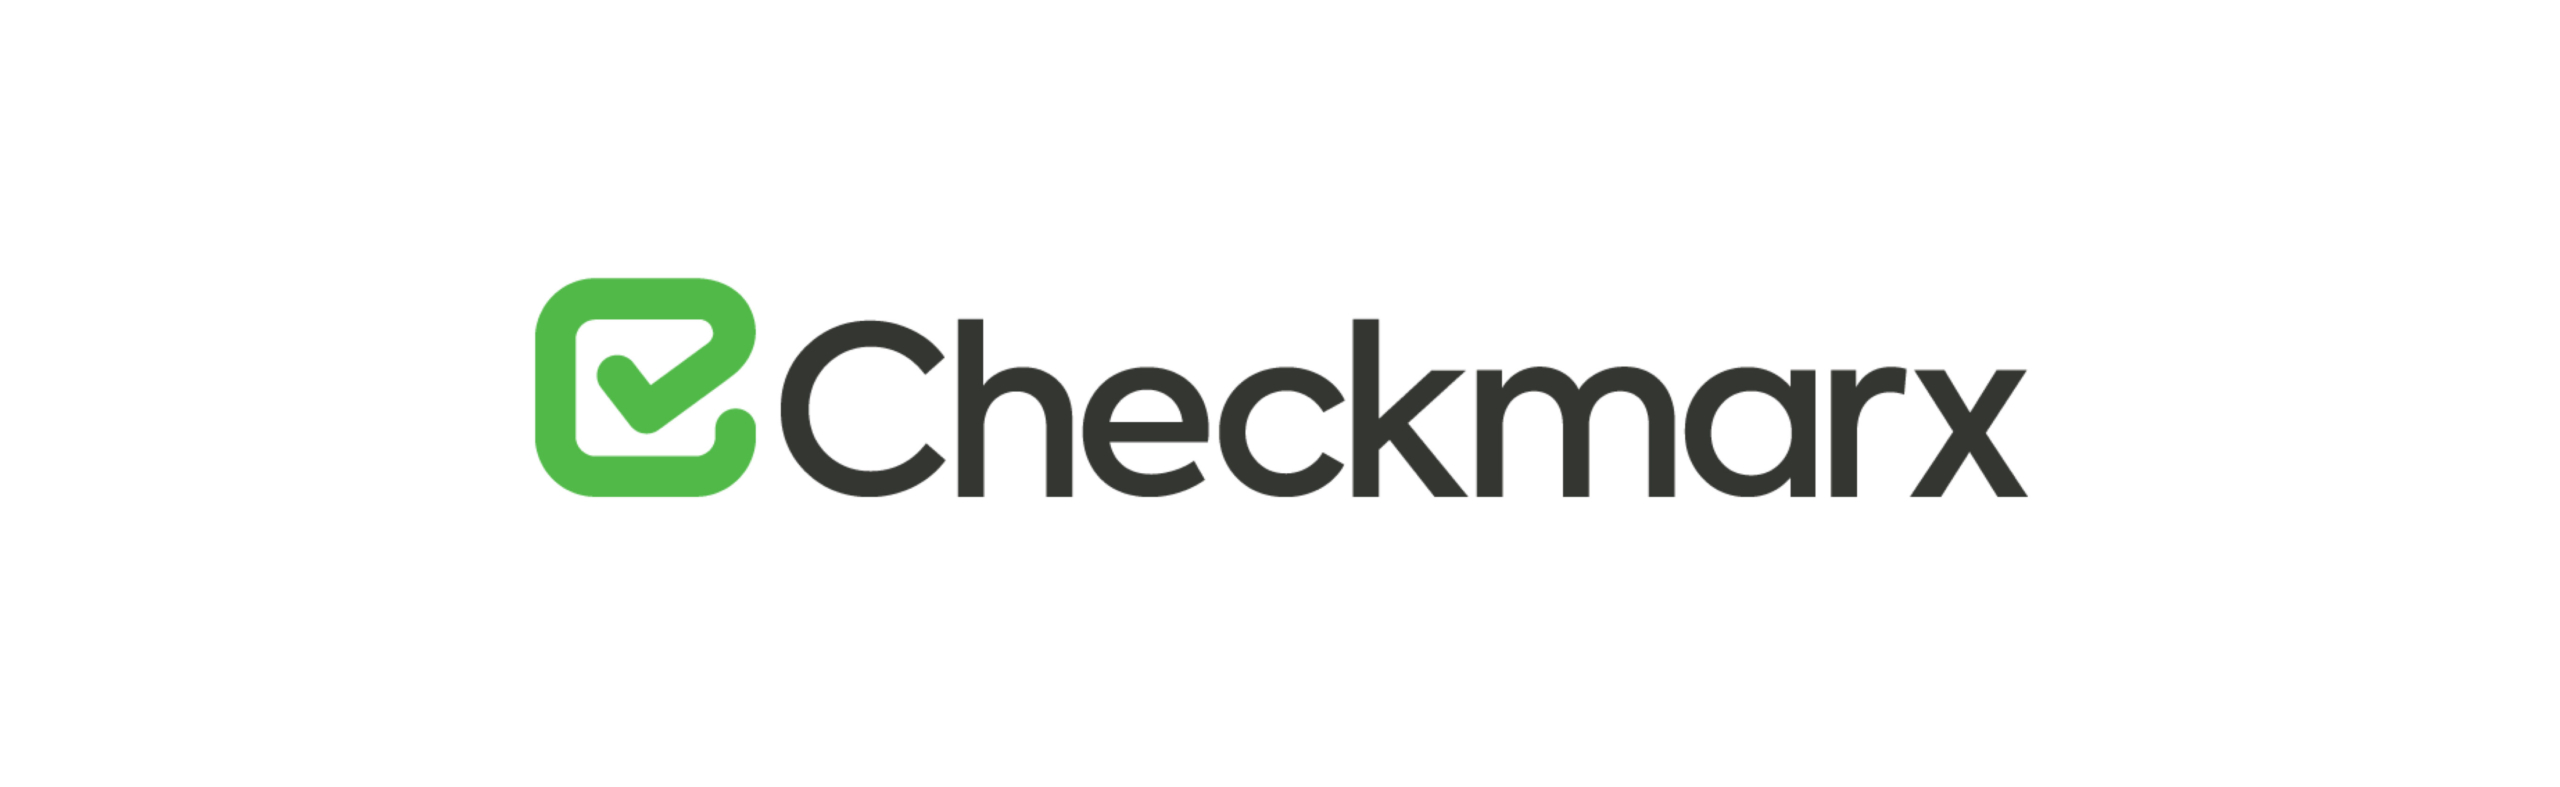 Checkmarx logo featuring a green check box icon